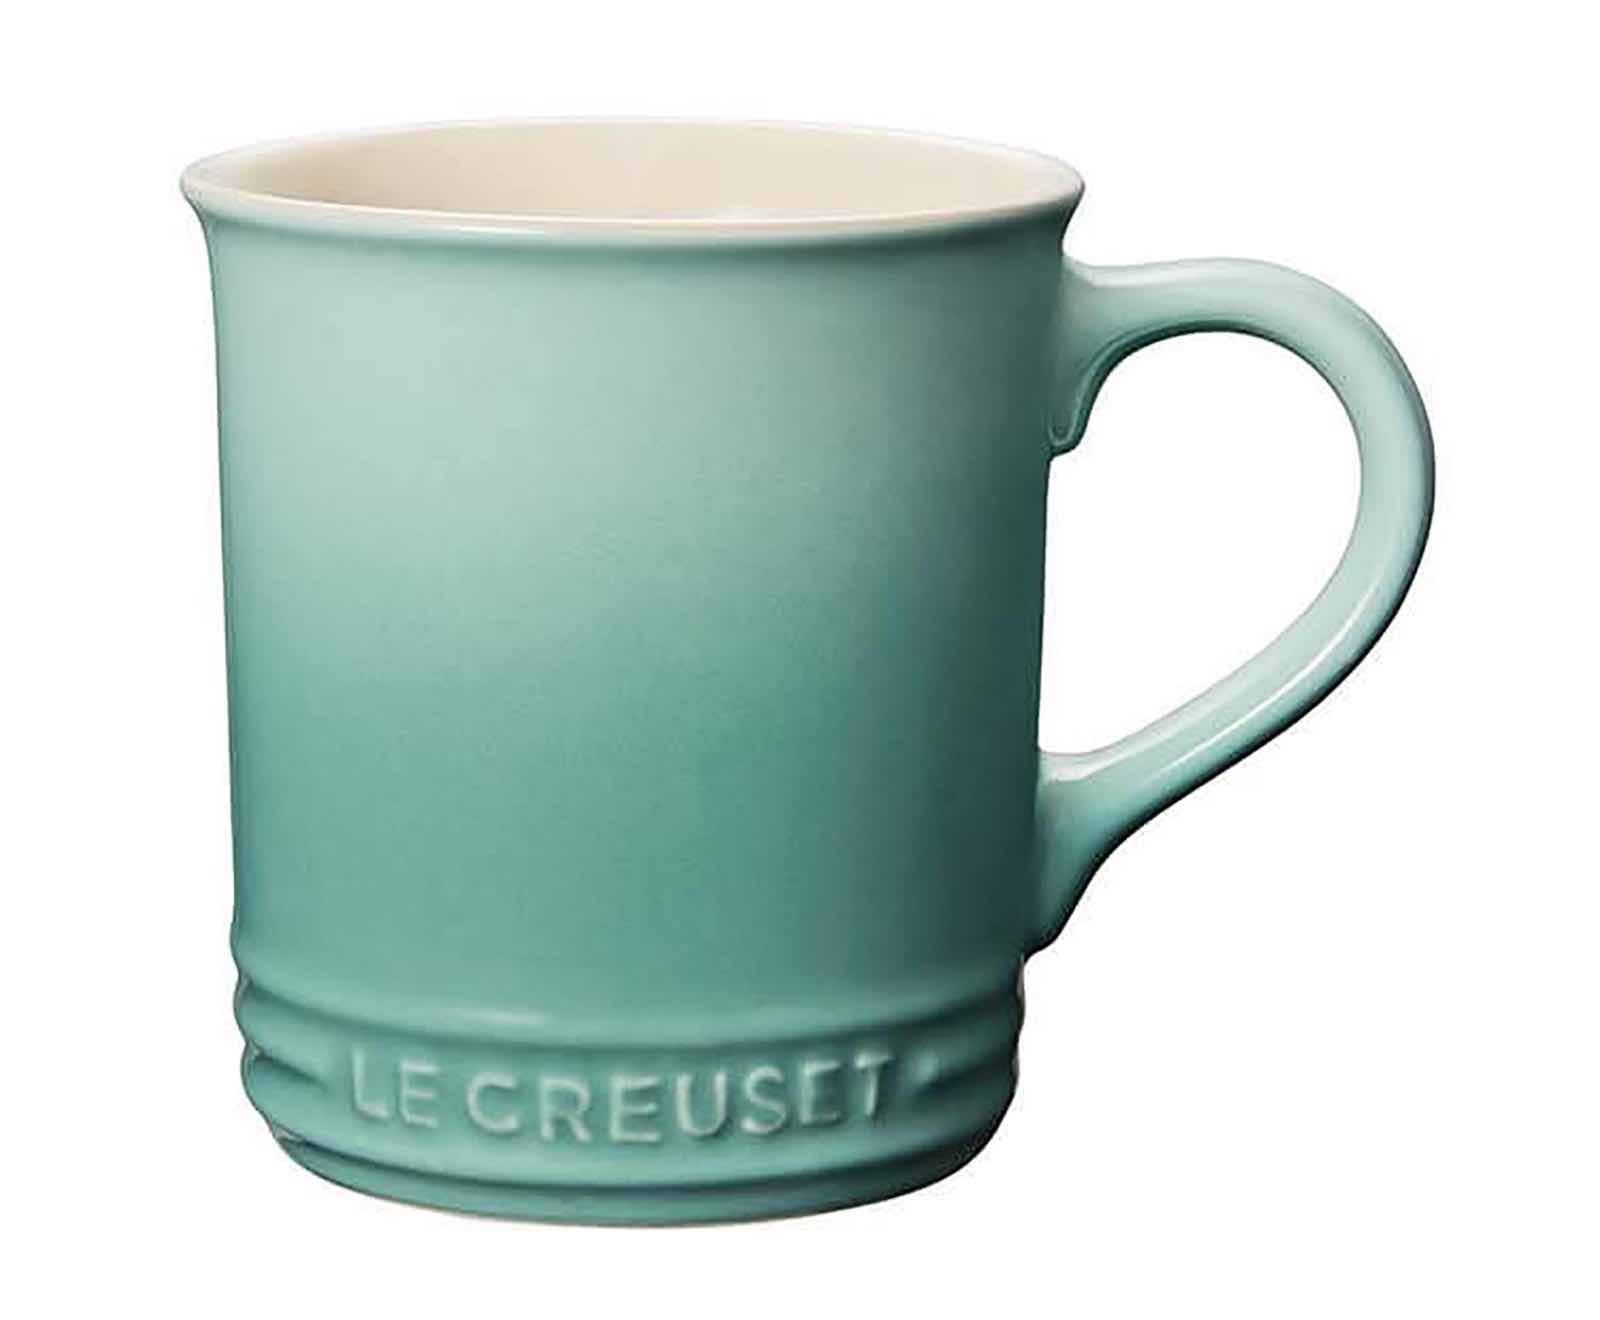 Le Creuset Classic Cozy Mugs